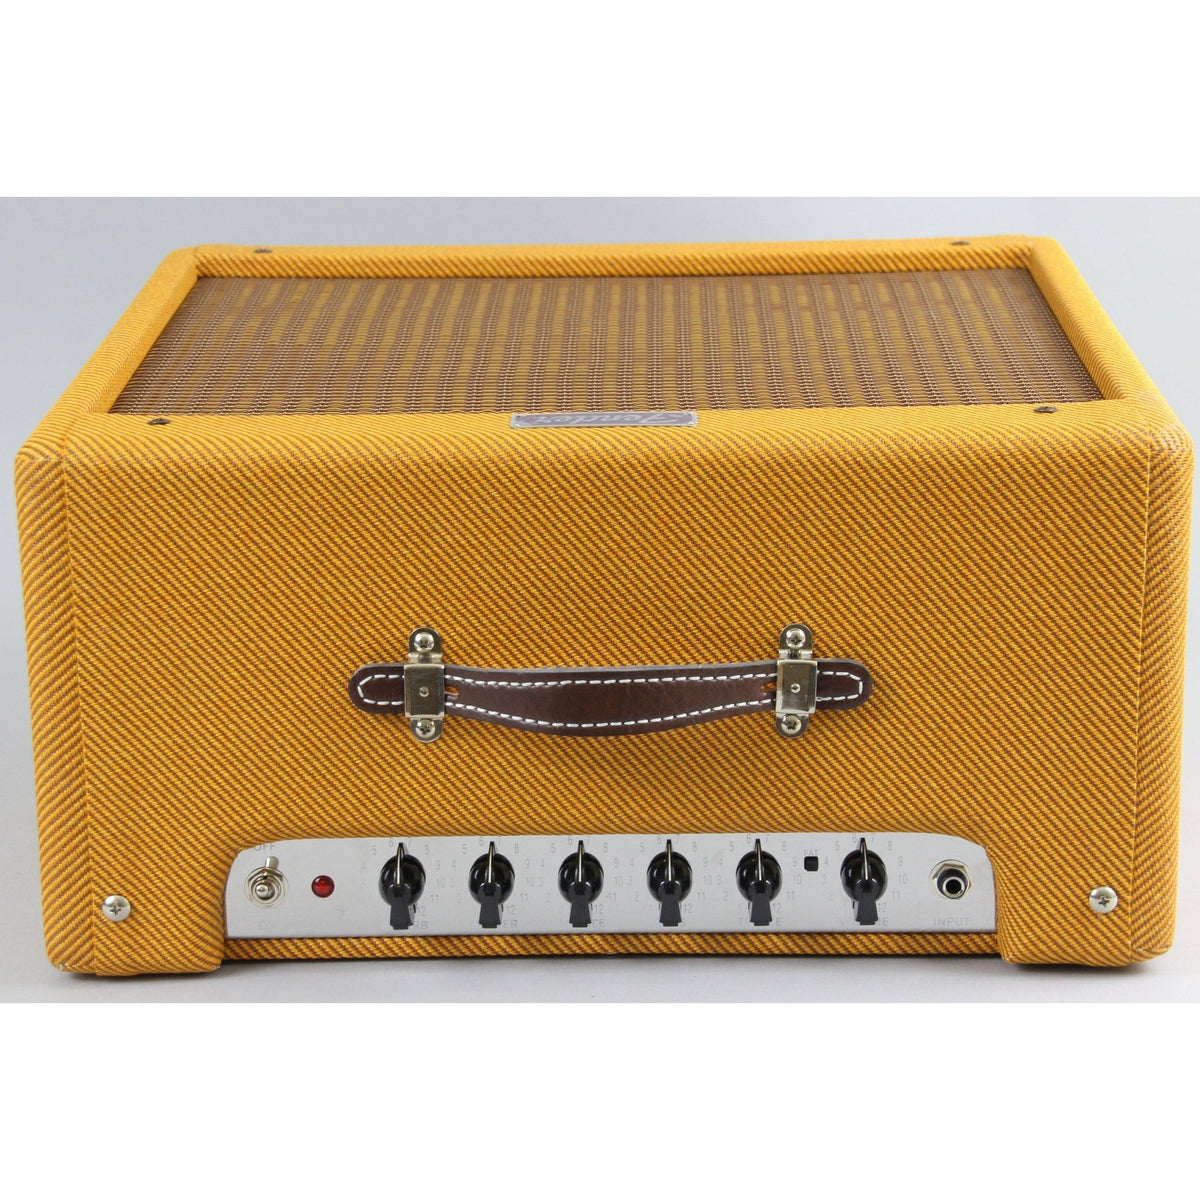 Fender Blues Junior Lacquered Tweed Combo Guitar Amplifier